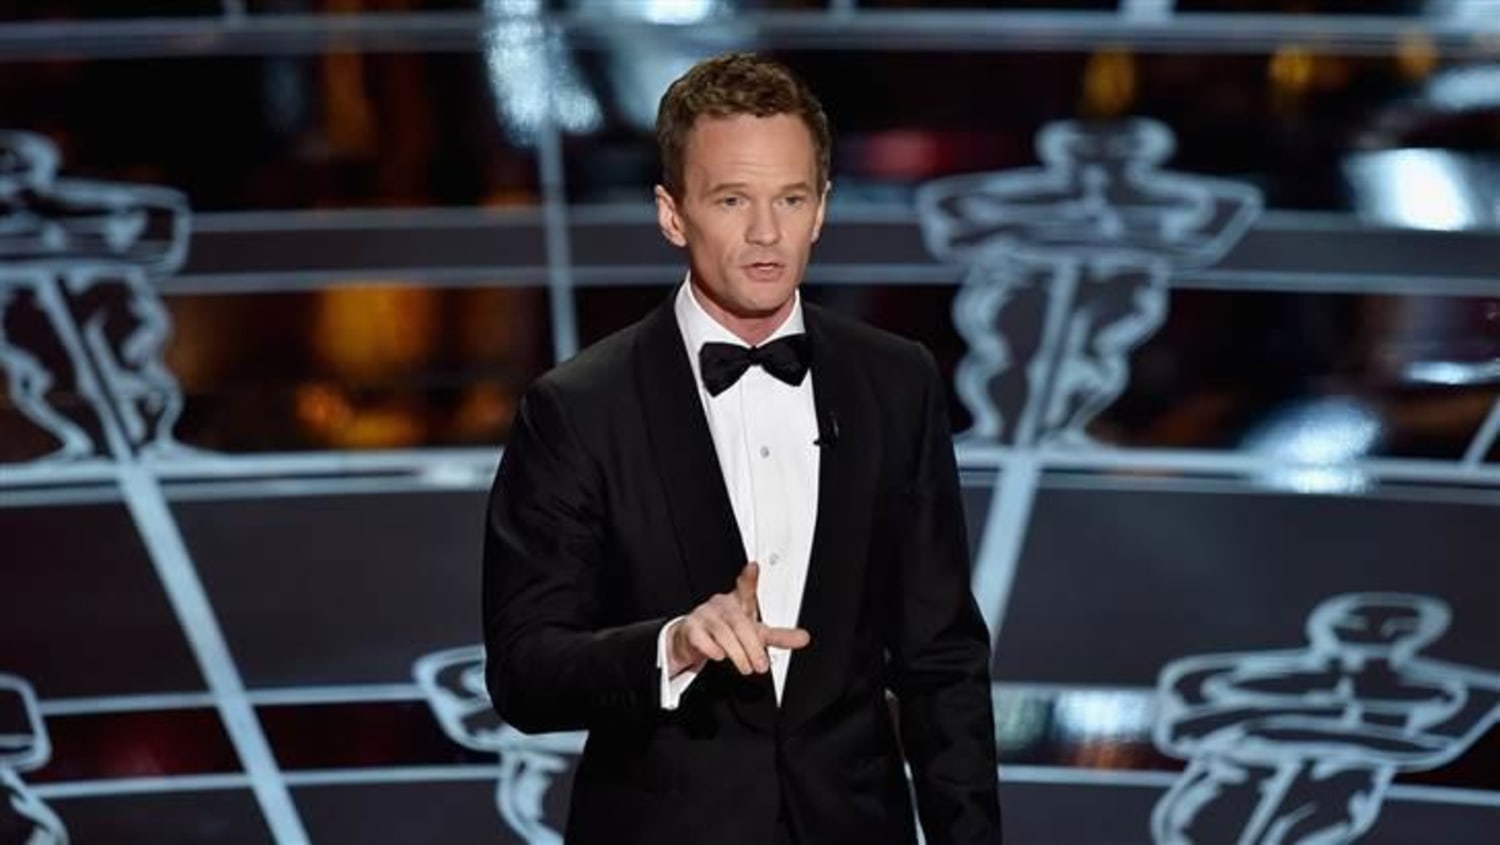 OMG, here's Neil Patrick Harris running around in his chonies at last  night's Oscars 